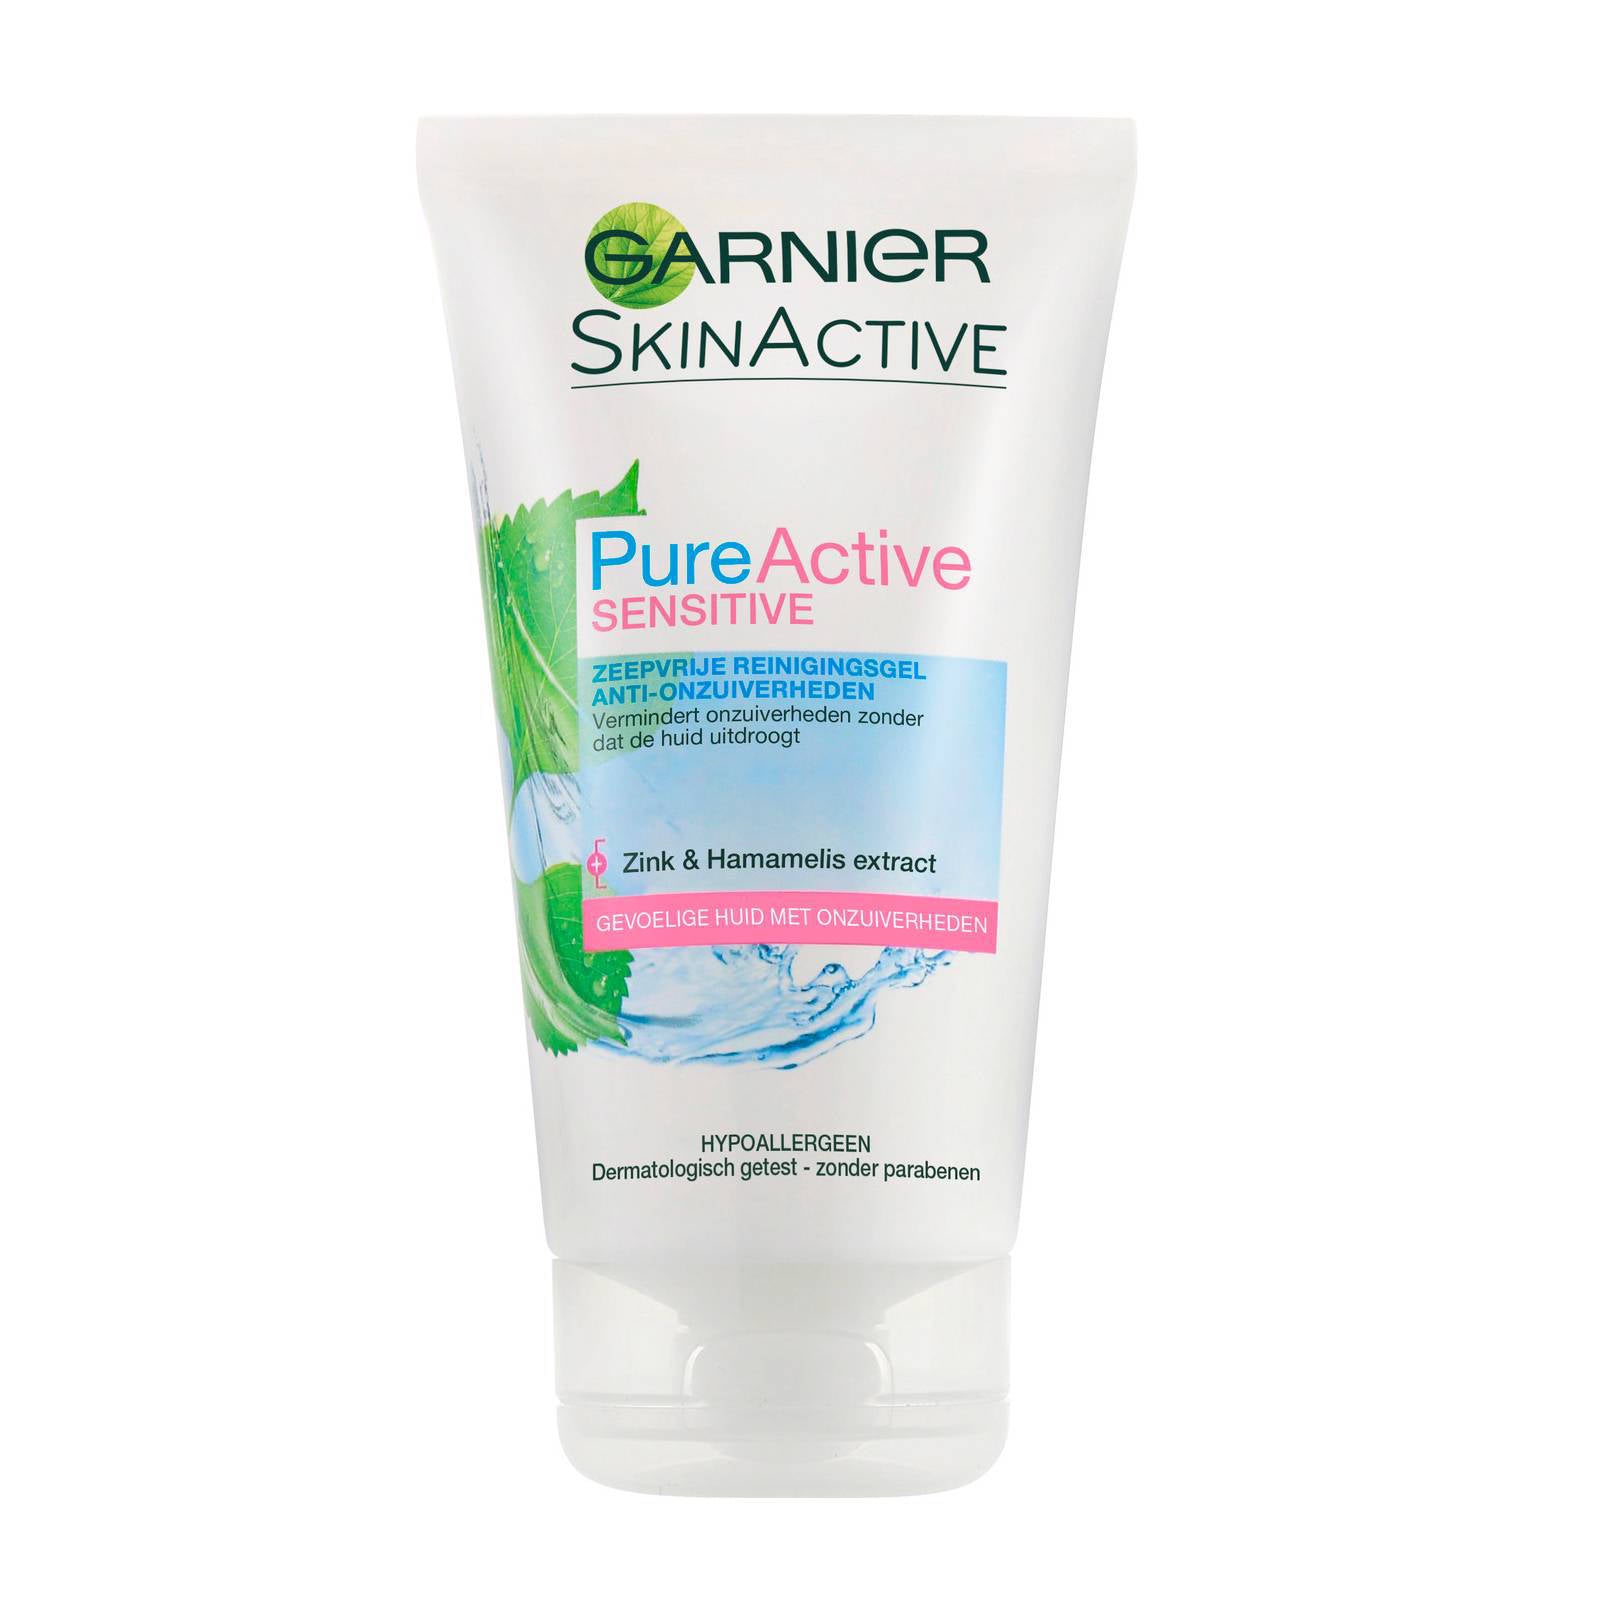 Skinactive PureActive | Garnier Not for my sensitive skin - We honest cosmetic reviews.